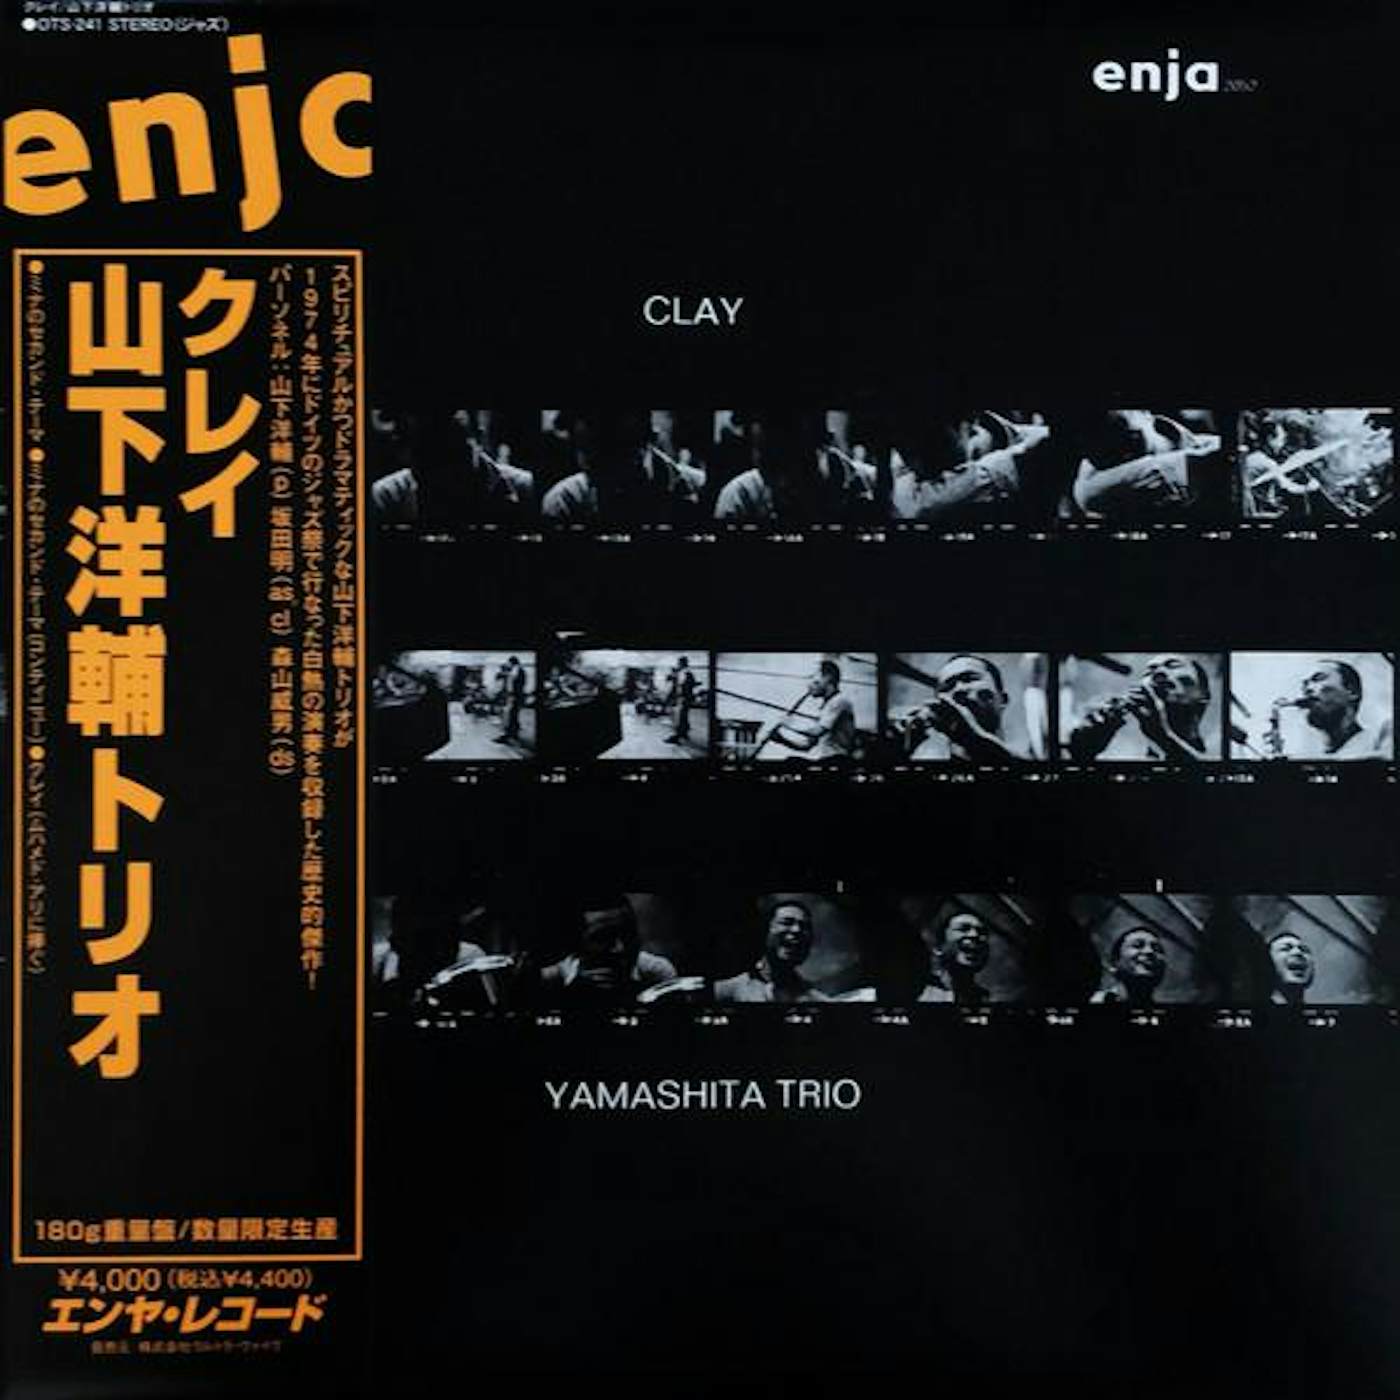 Yosuke Yamashita Clay Vinyl Record